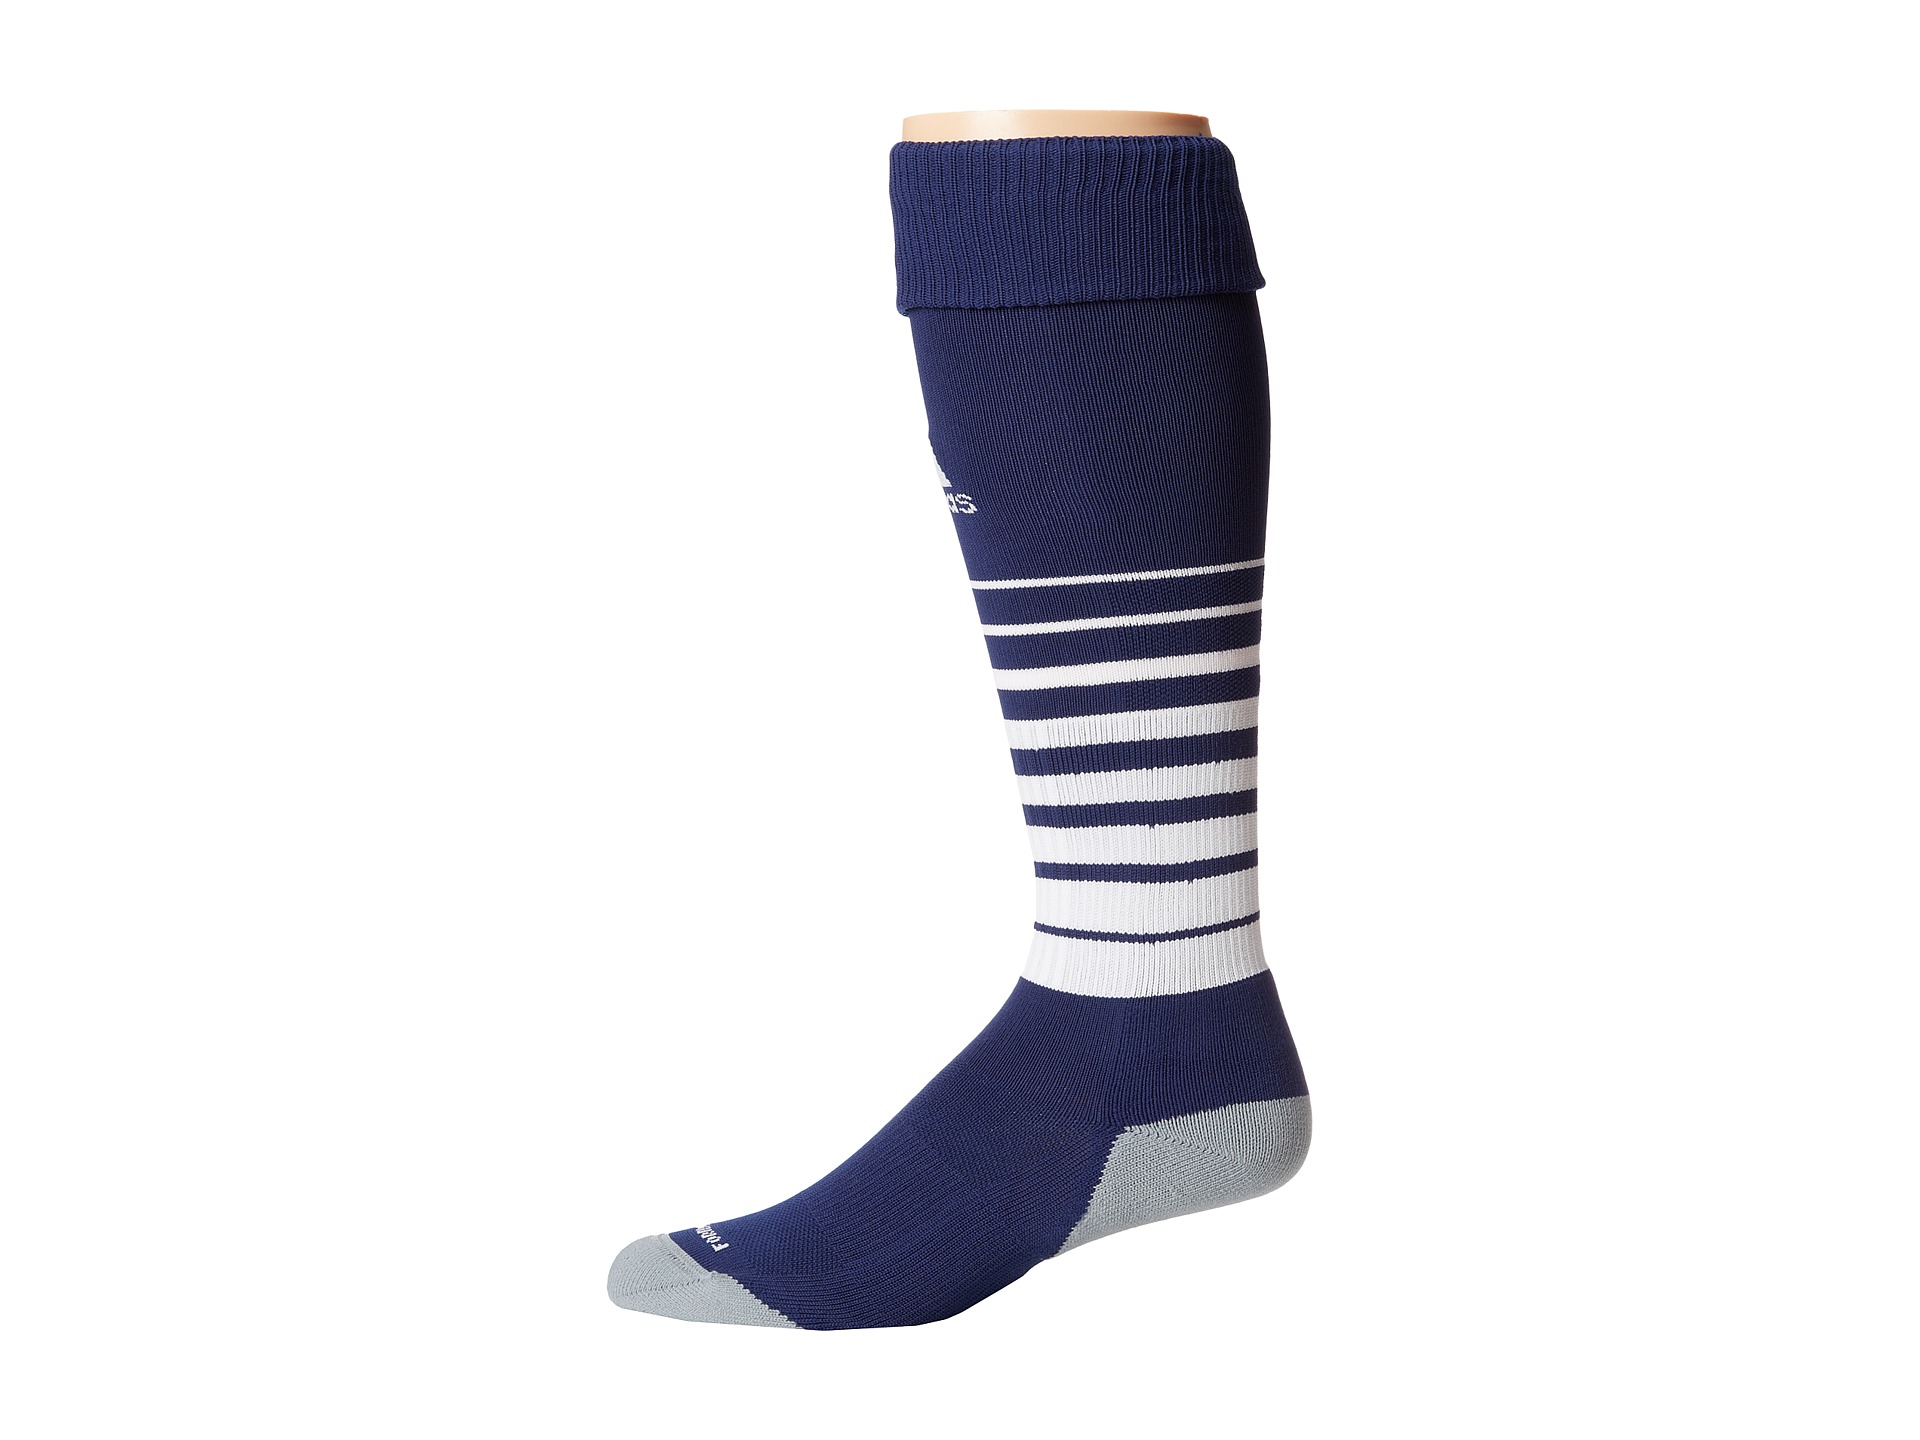 adidas soccer socks white with blue stripes